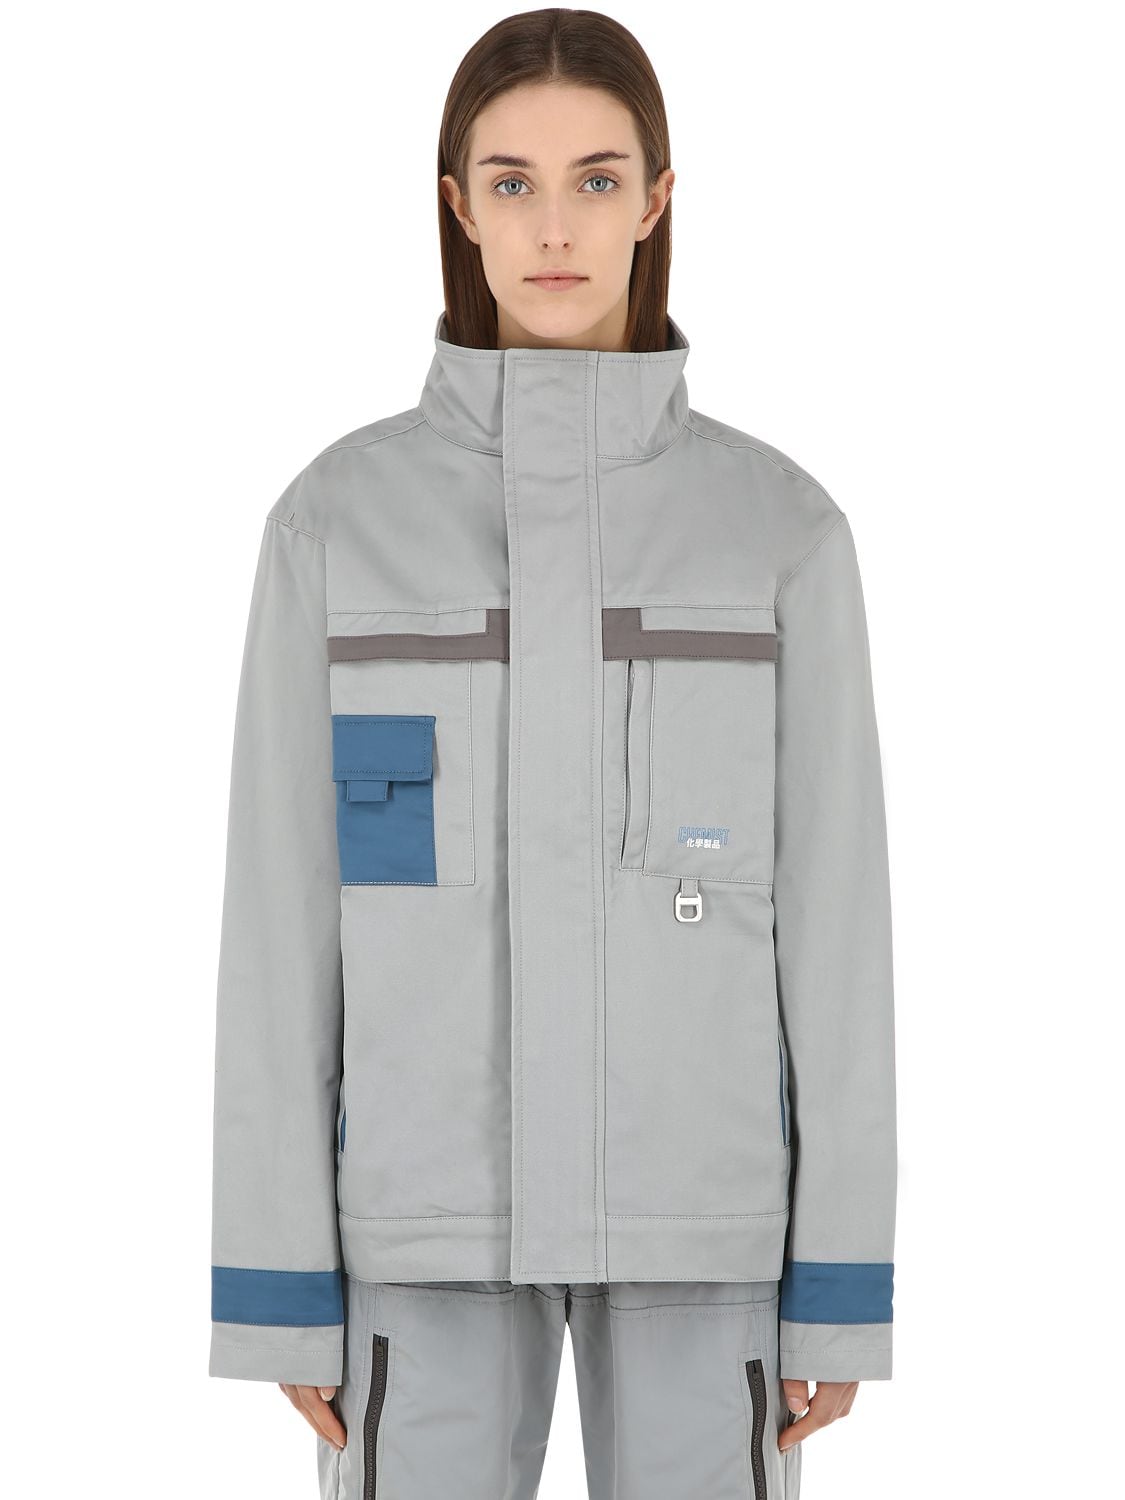 C2h4 Workwear Cotton Canvas Lab Jacket In Grey